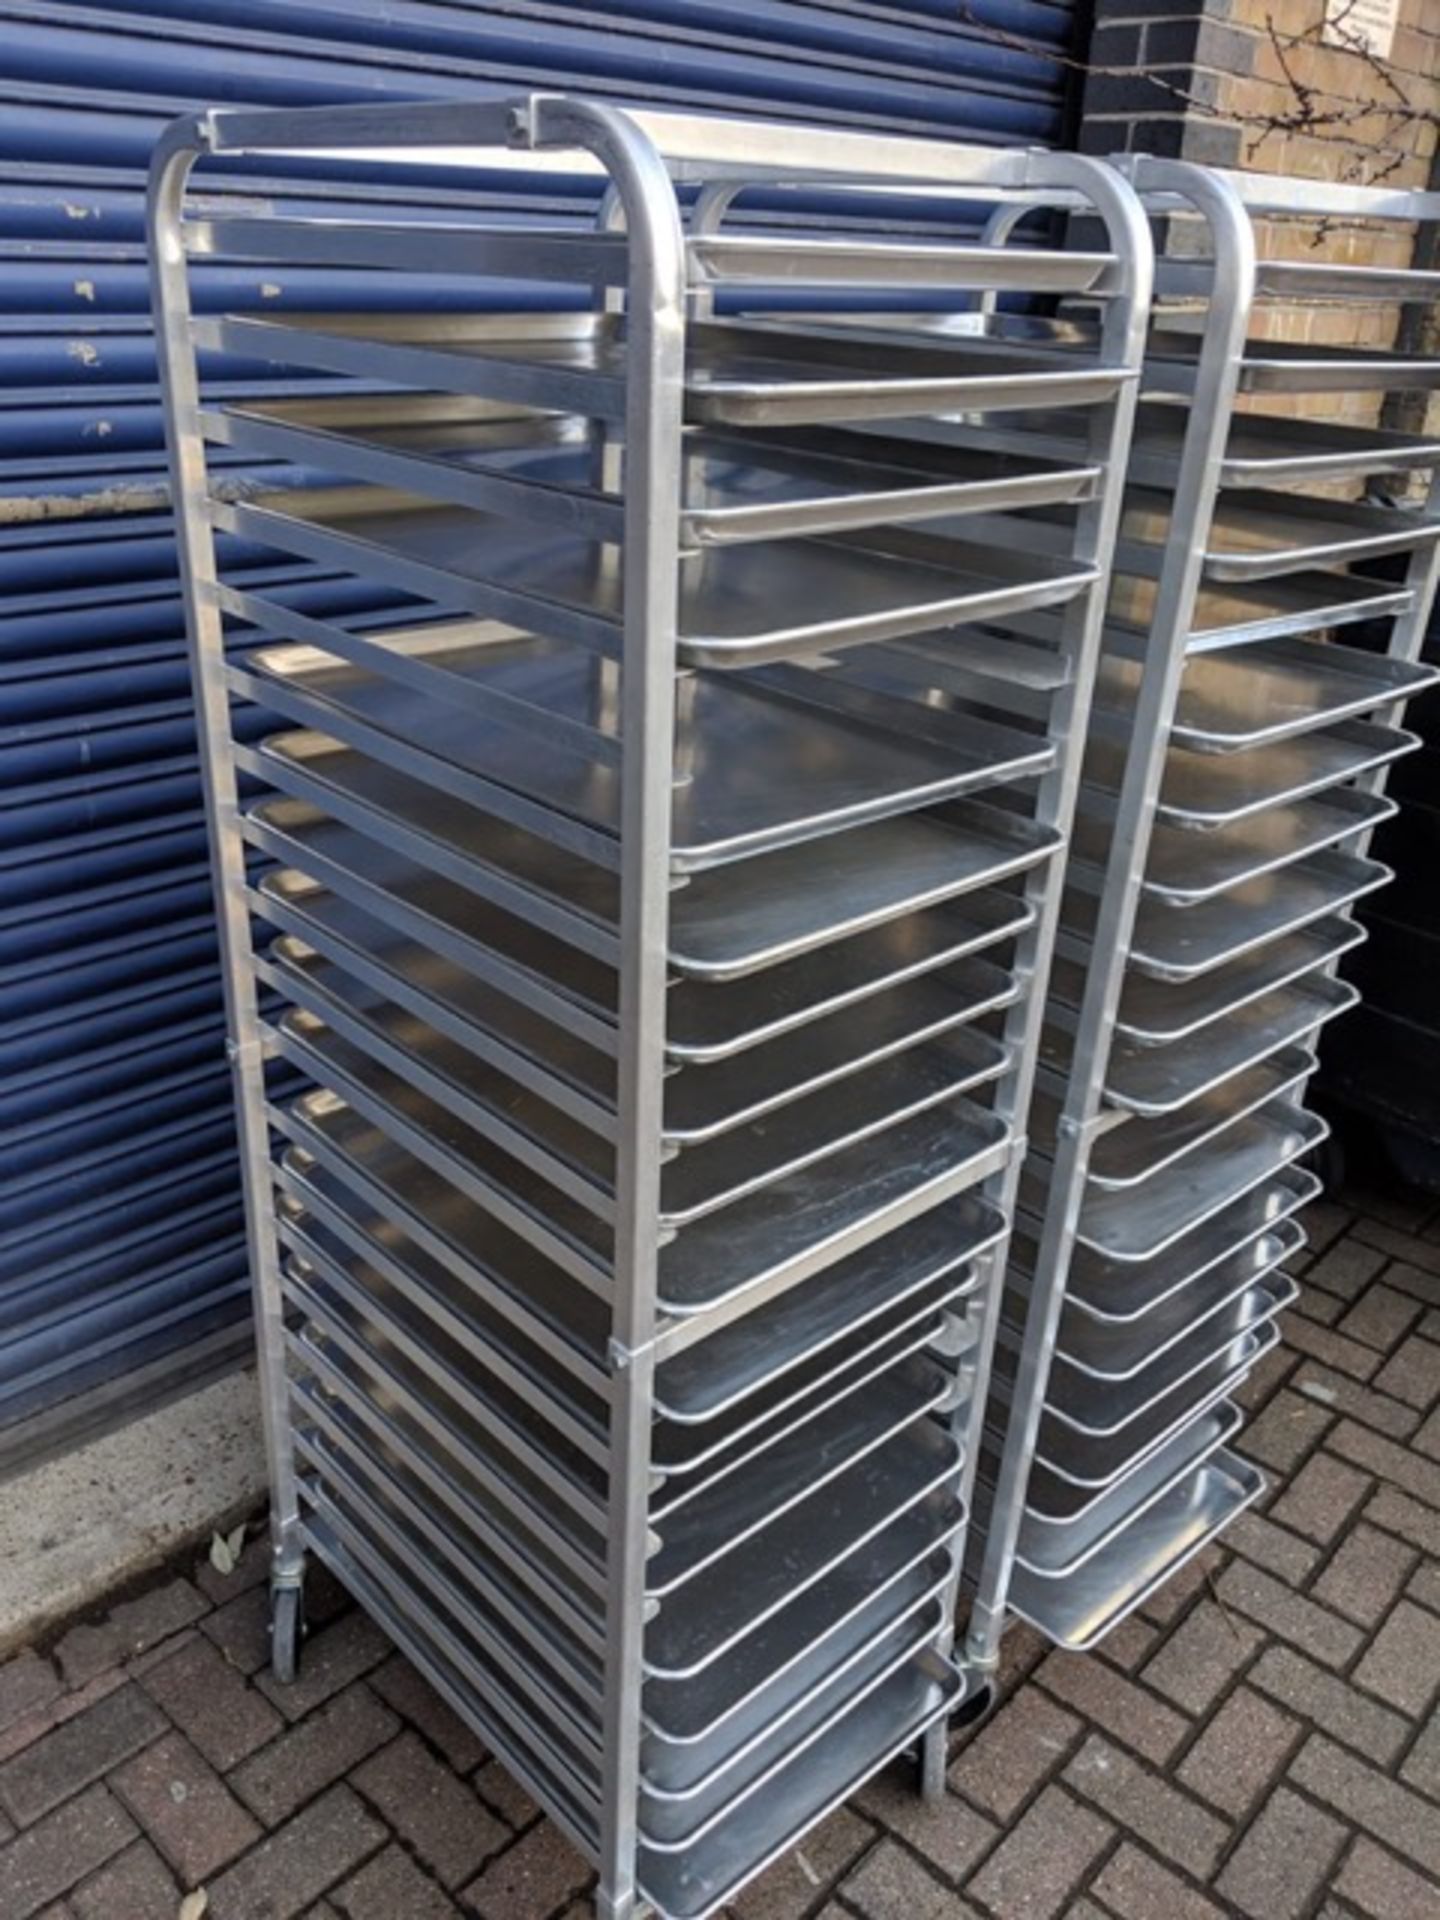 2 x Racks, with approx. 20 trays per rack. Approx 52cm wide x 66cm deep x 175cm high.